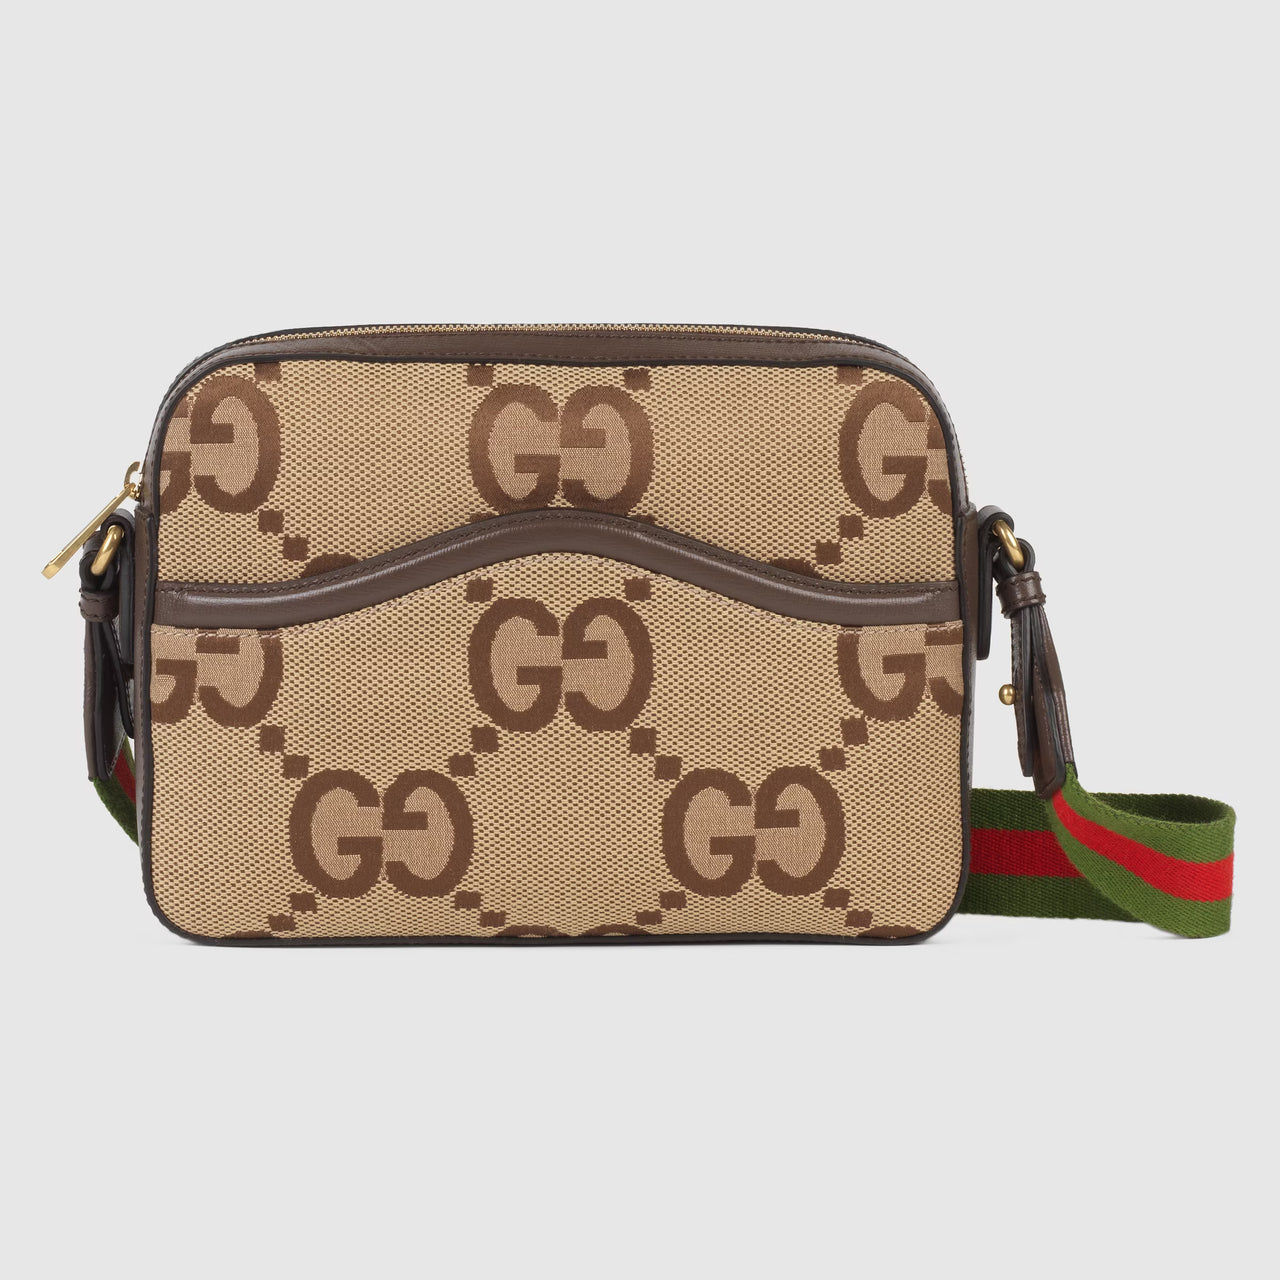 Gucci Jumbo GG Messenger Bag (Camel and Ebony)